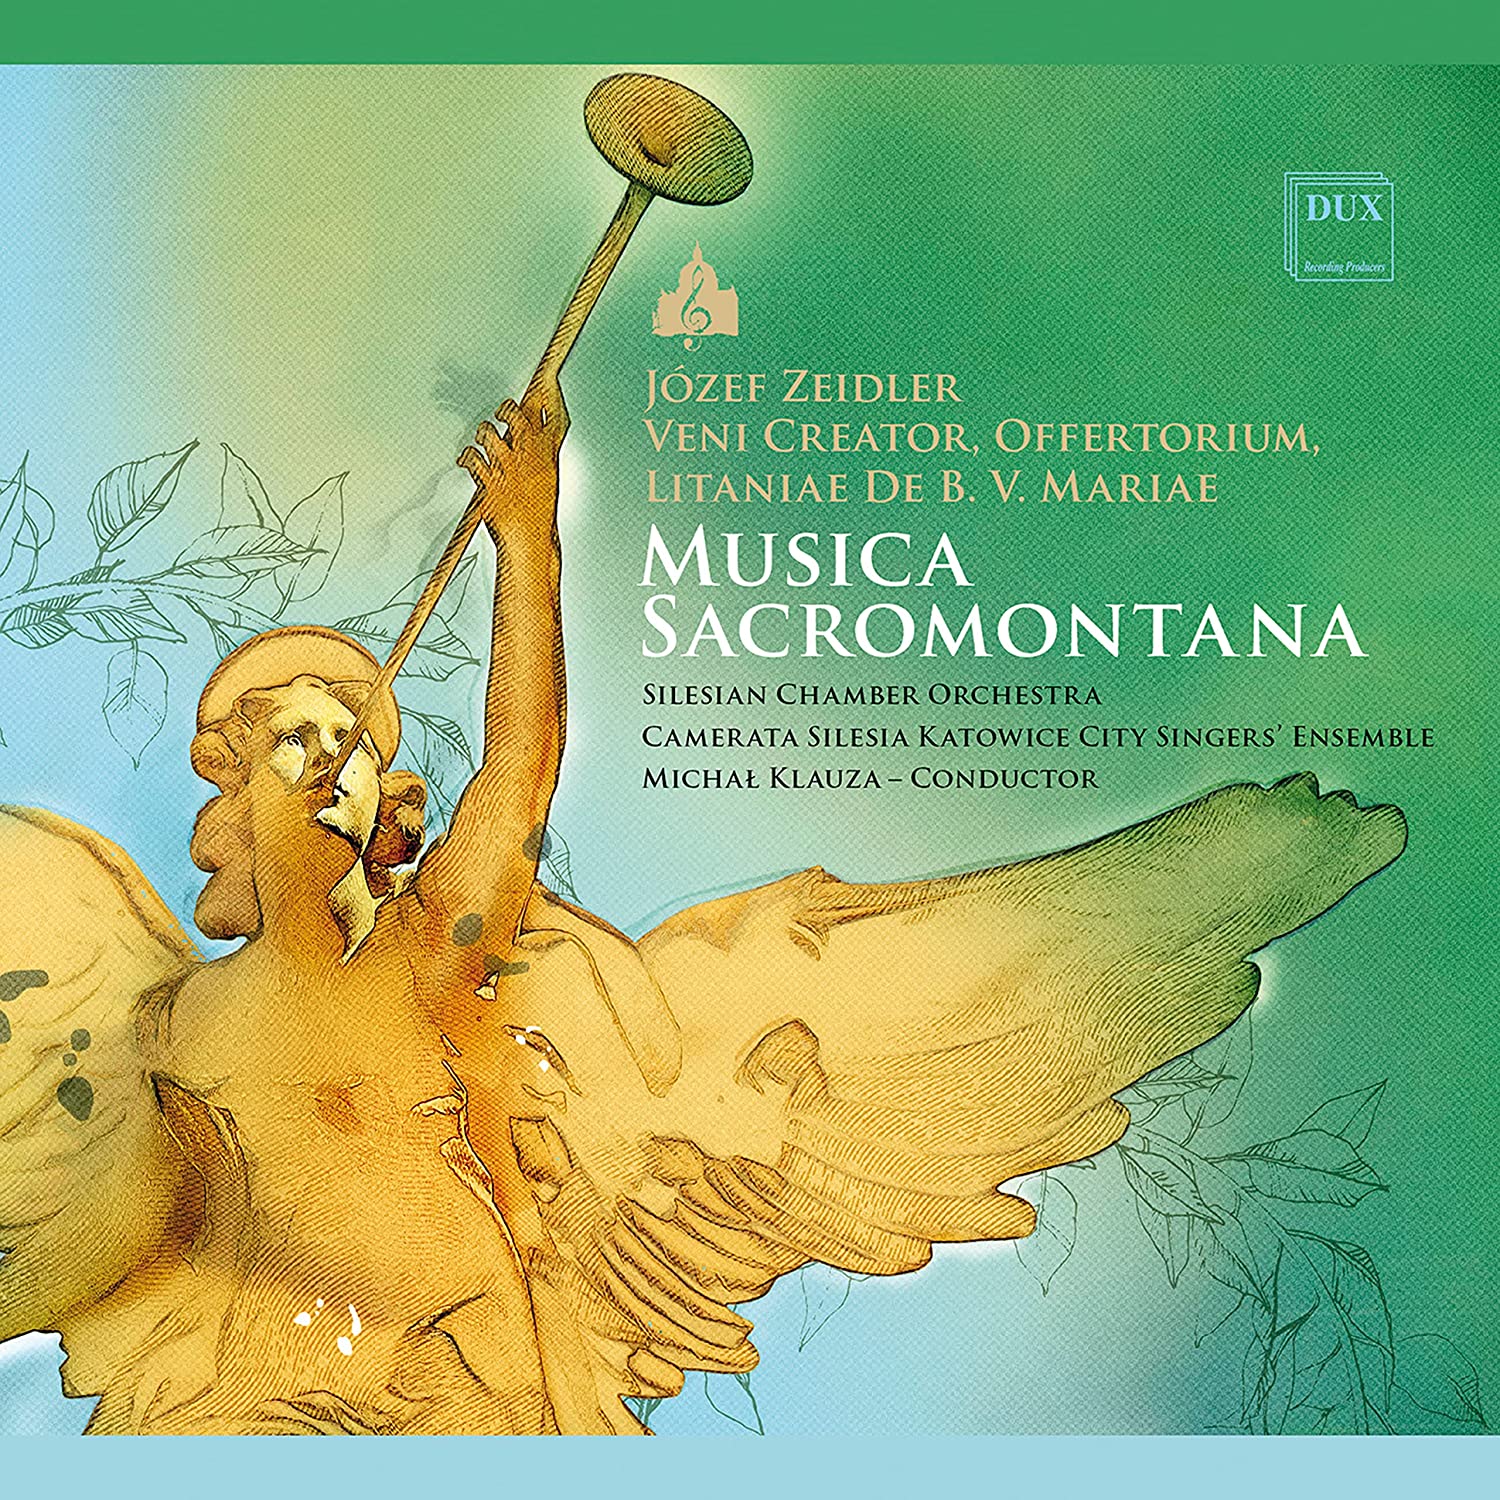 Musica Sactomontana, DUX.